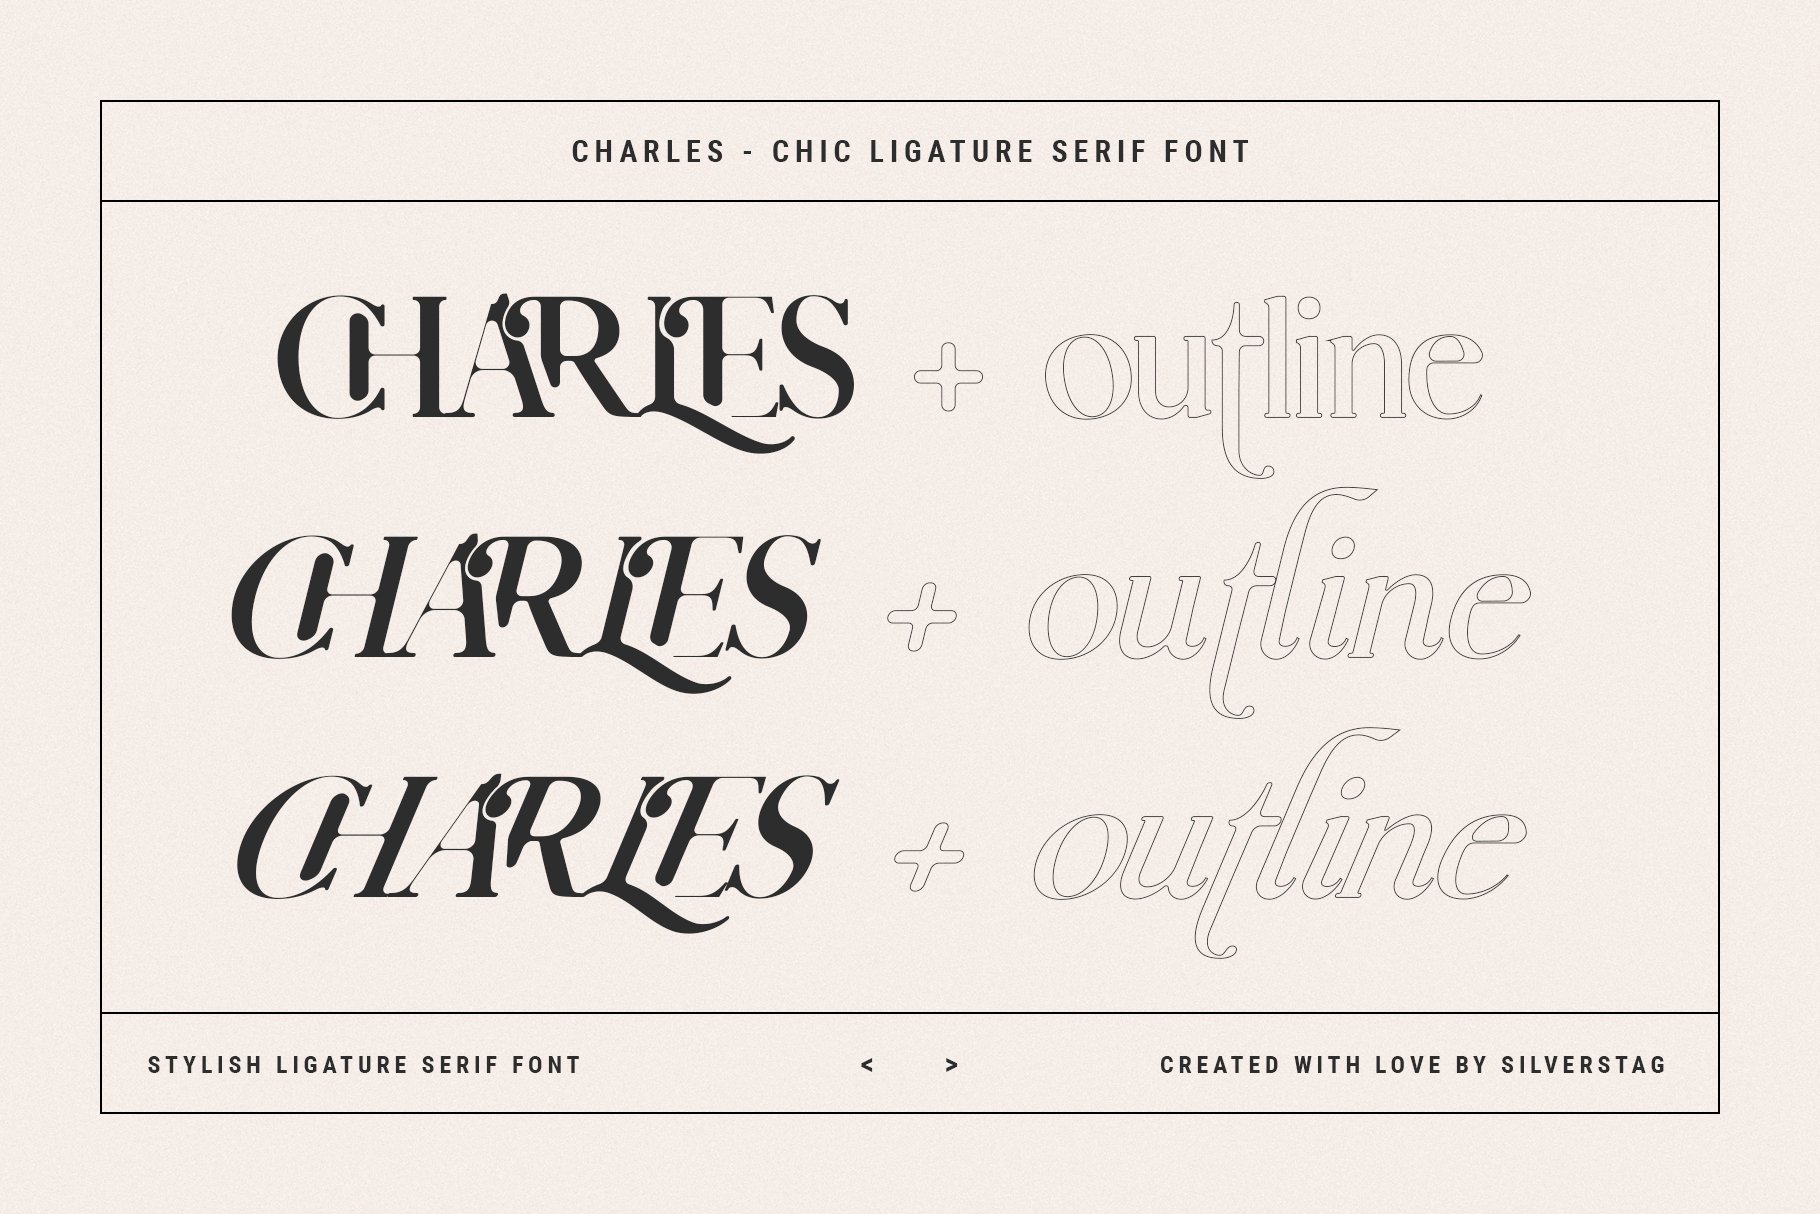 Charles ligature serif font style.